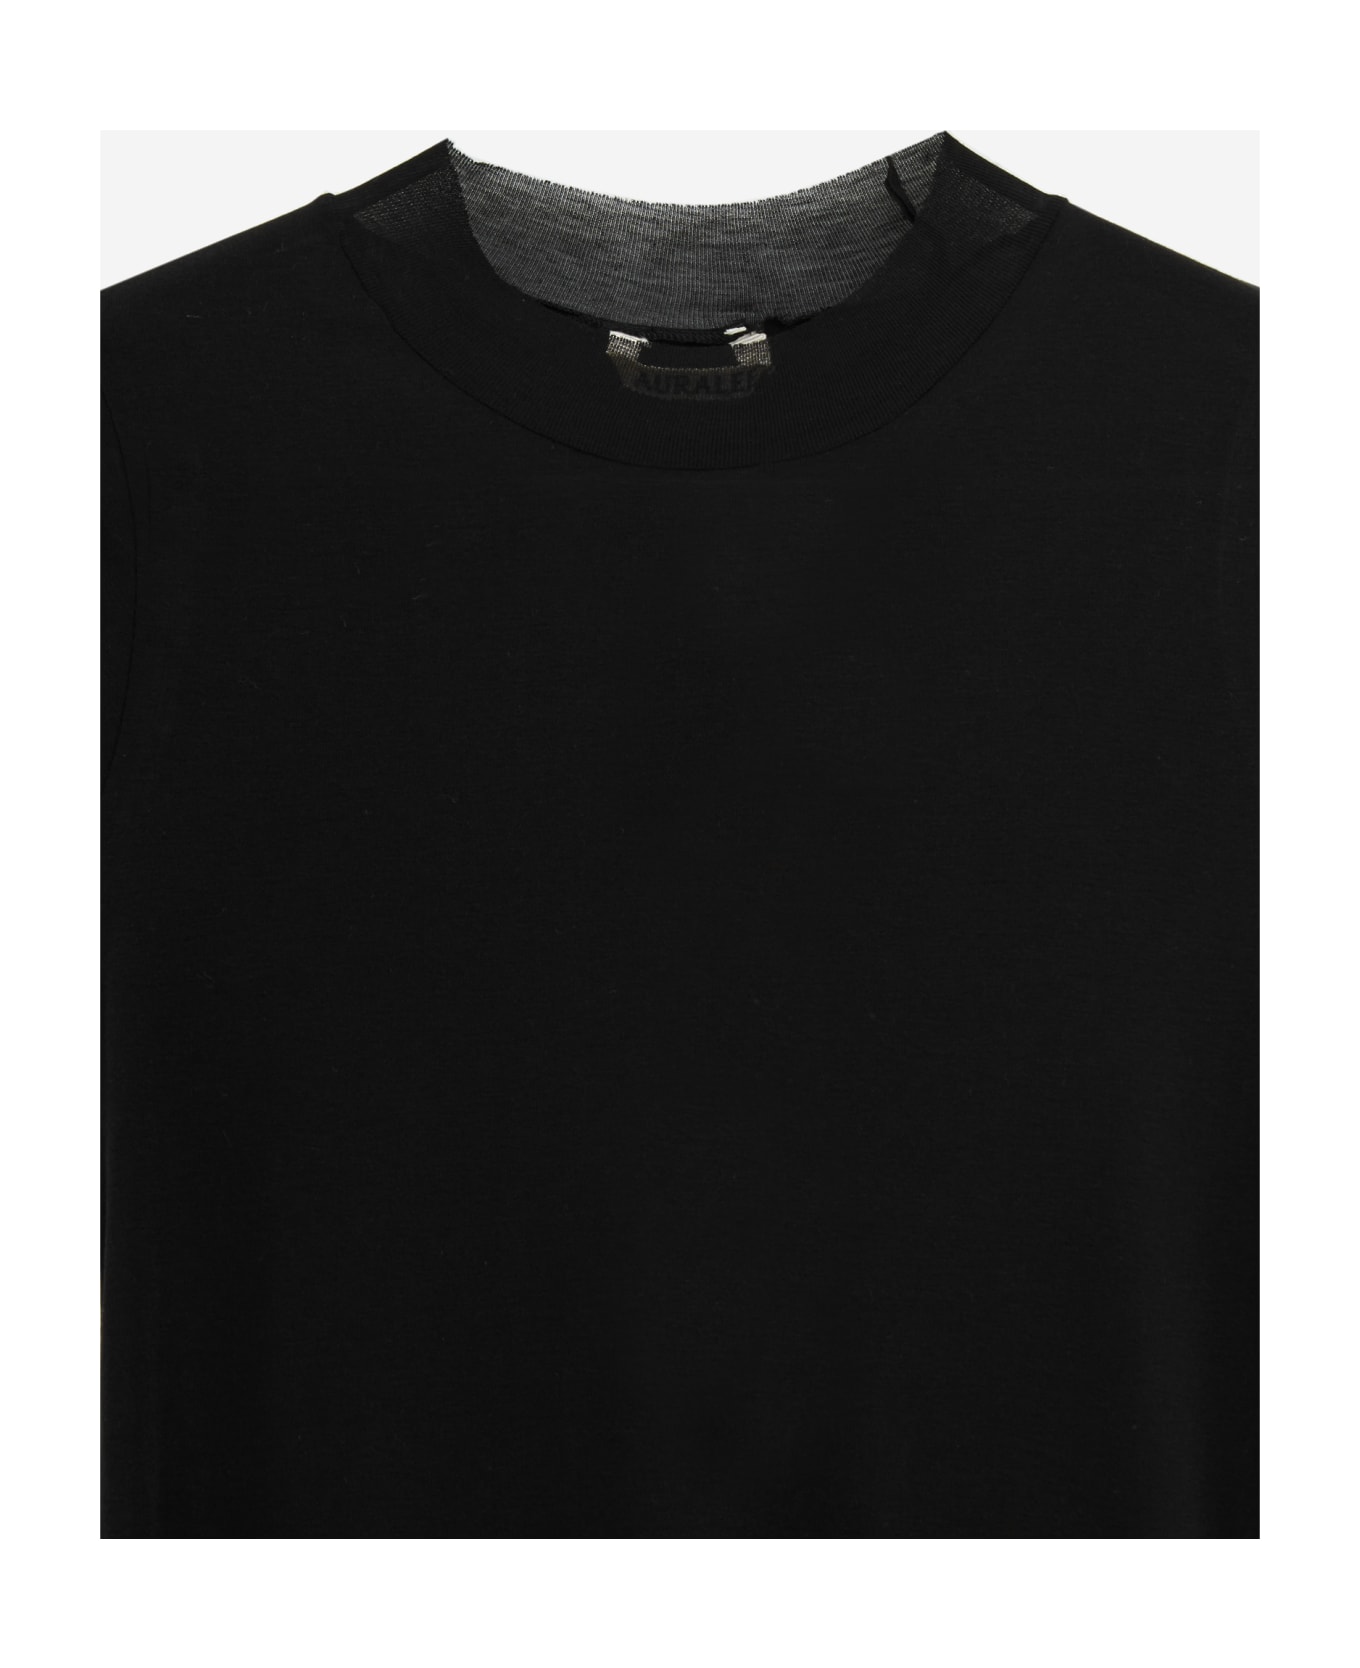 Auralee T-shirt - black